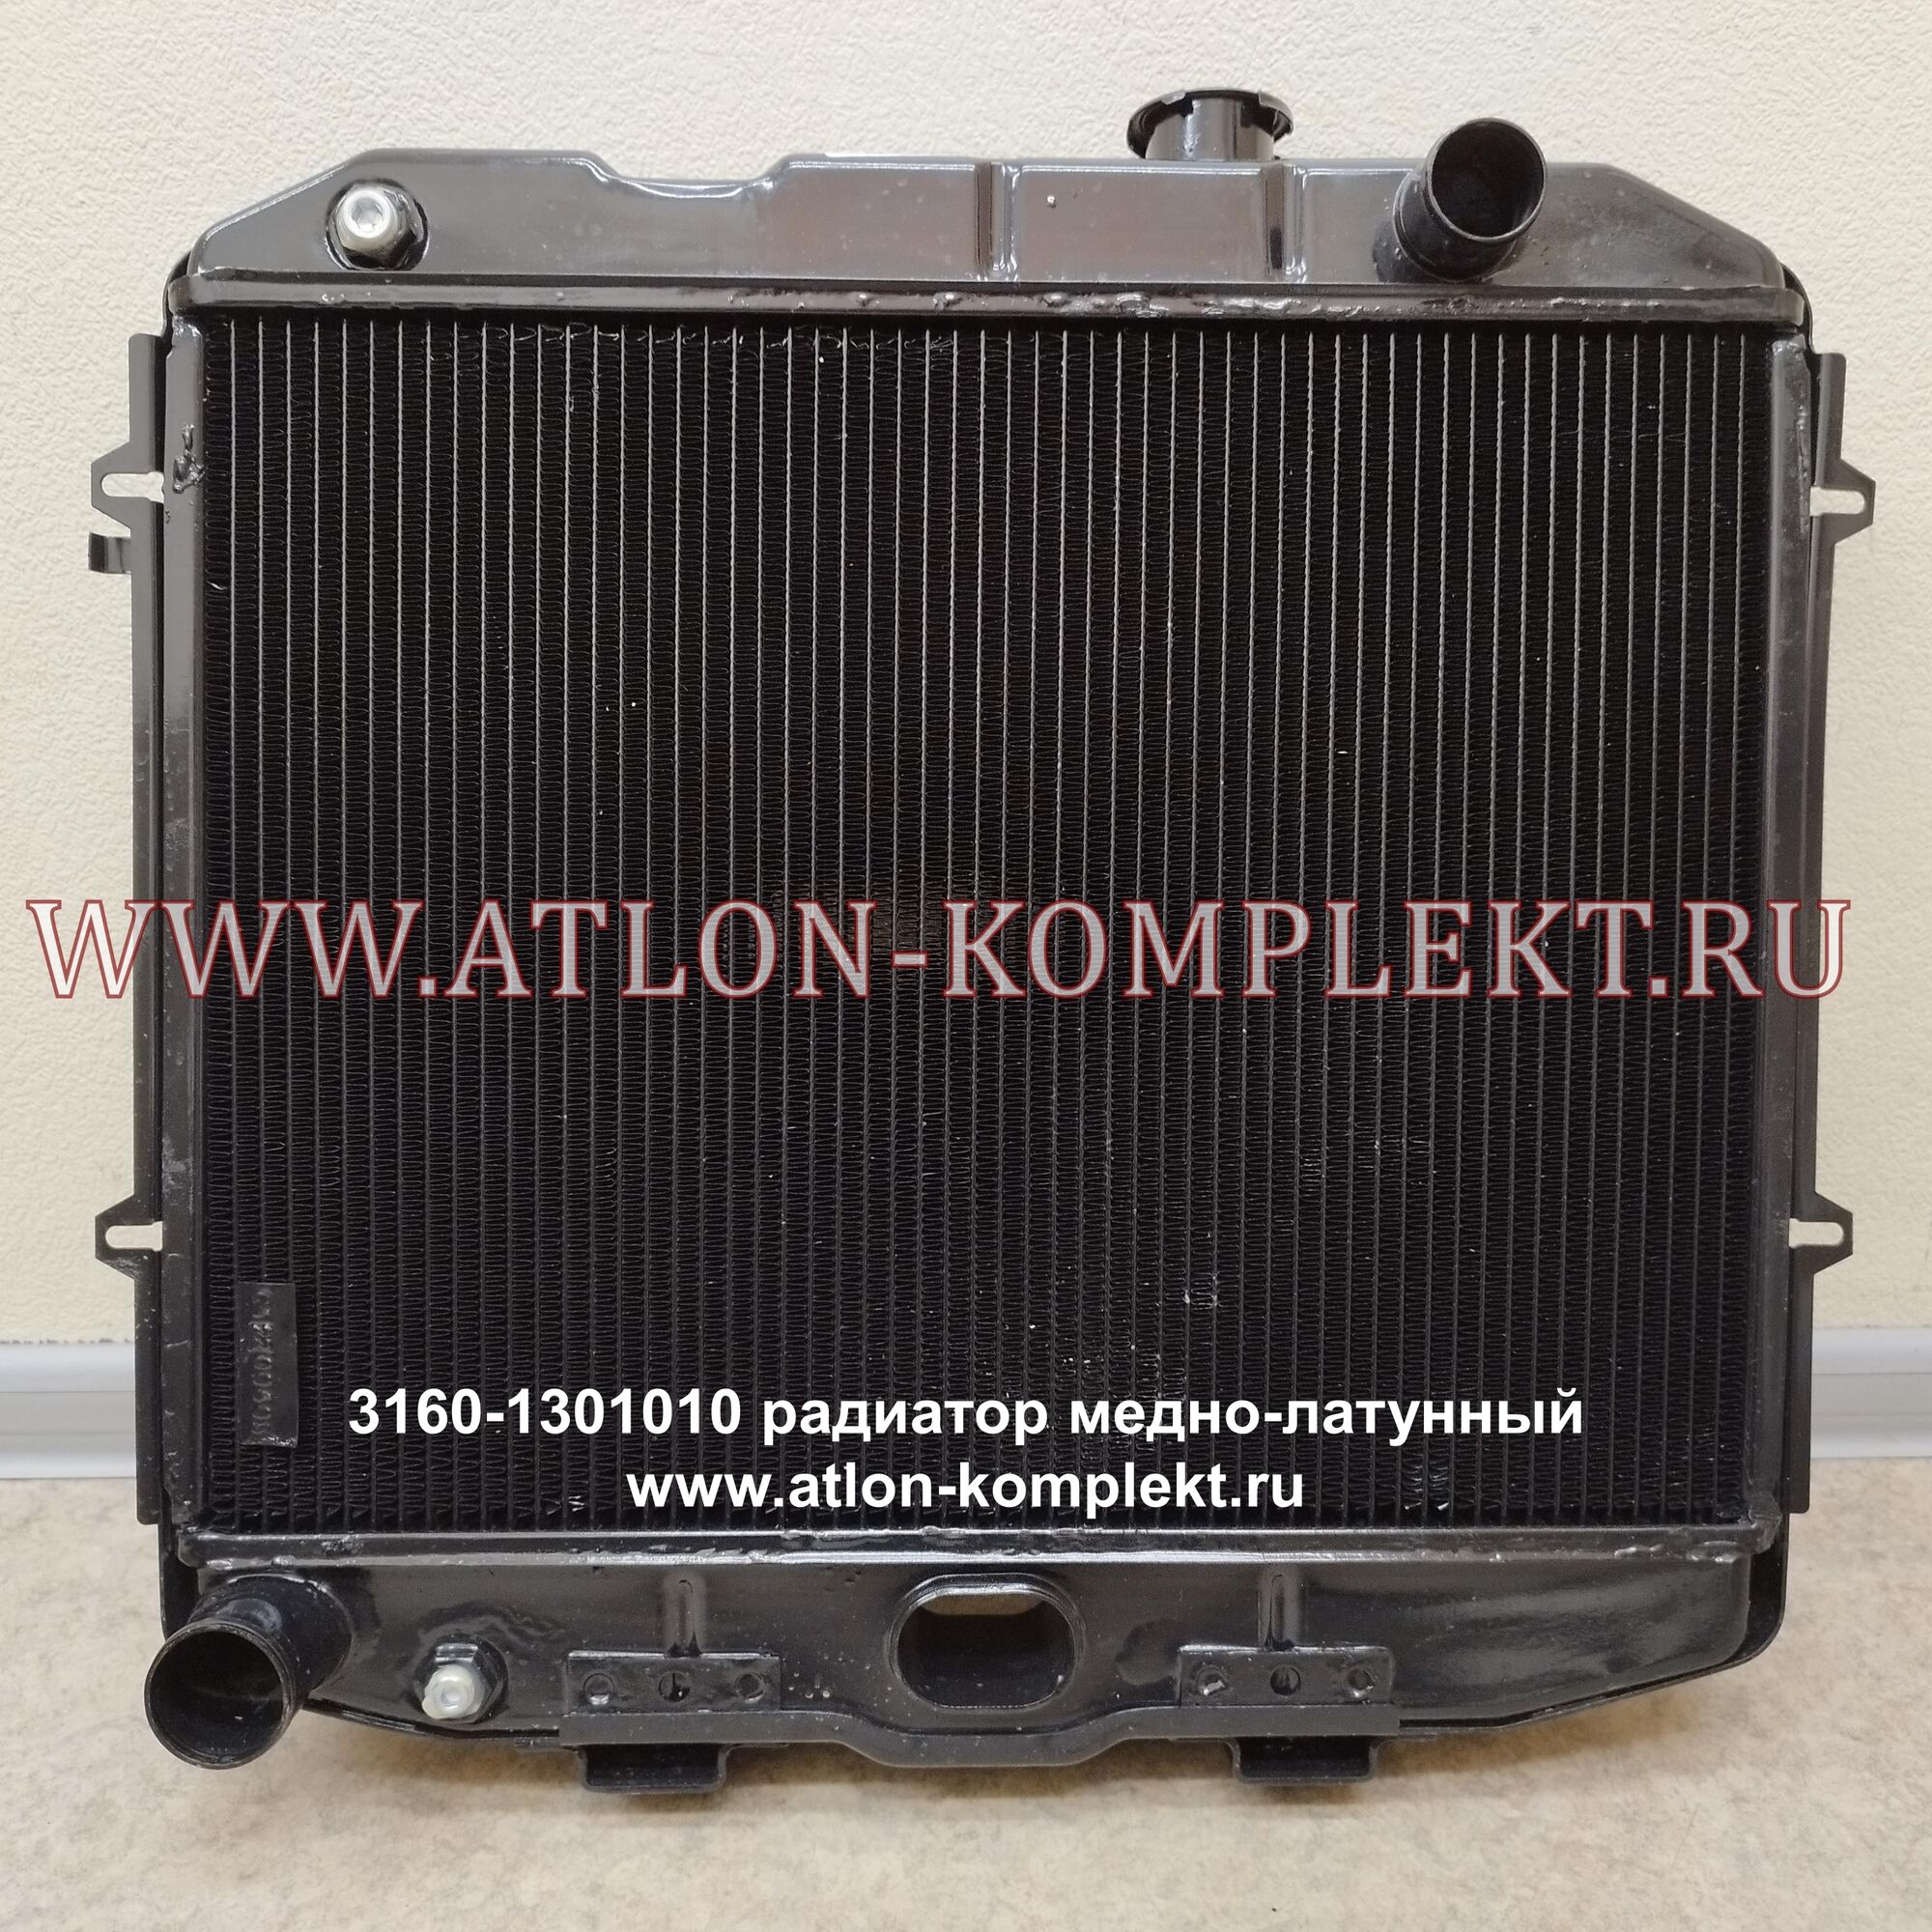 Радиатор УАЗ-3160, УАЗ-3162, УАЗ-31602 медный 3160-1301010 3-х рядный